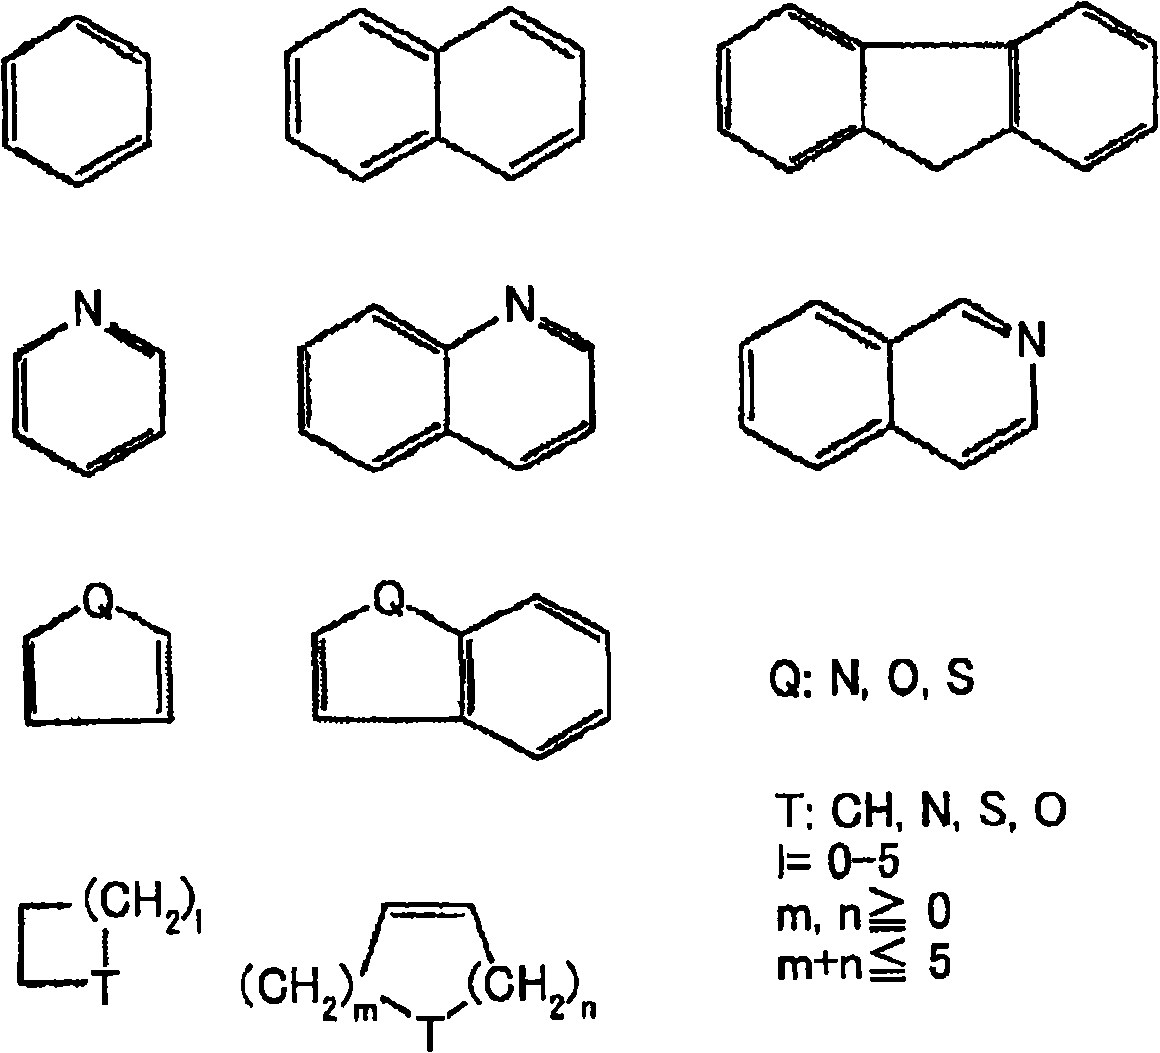 Stable solid preparation comprising 4,5-epoxymorphinan derivative